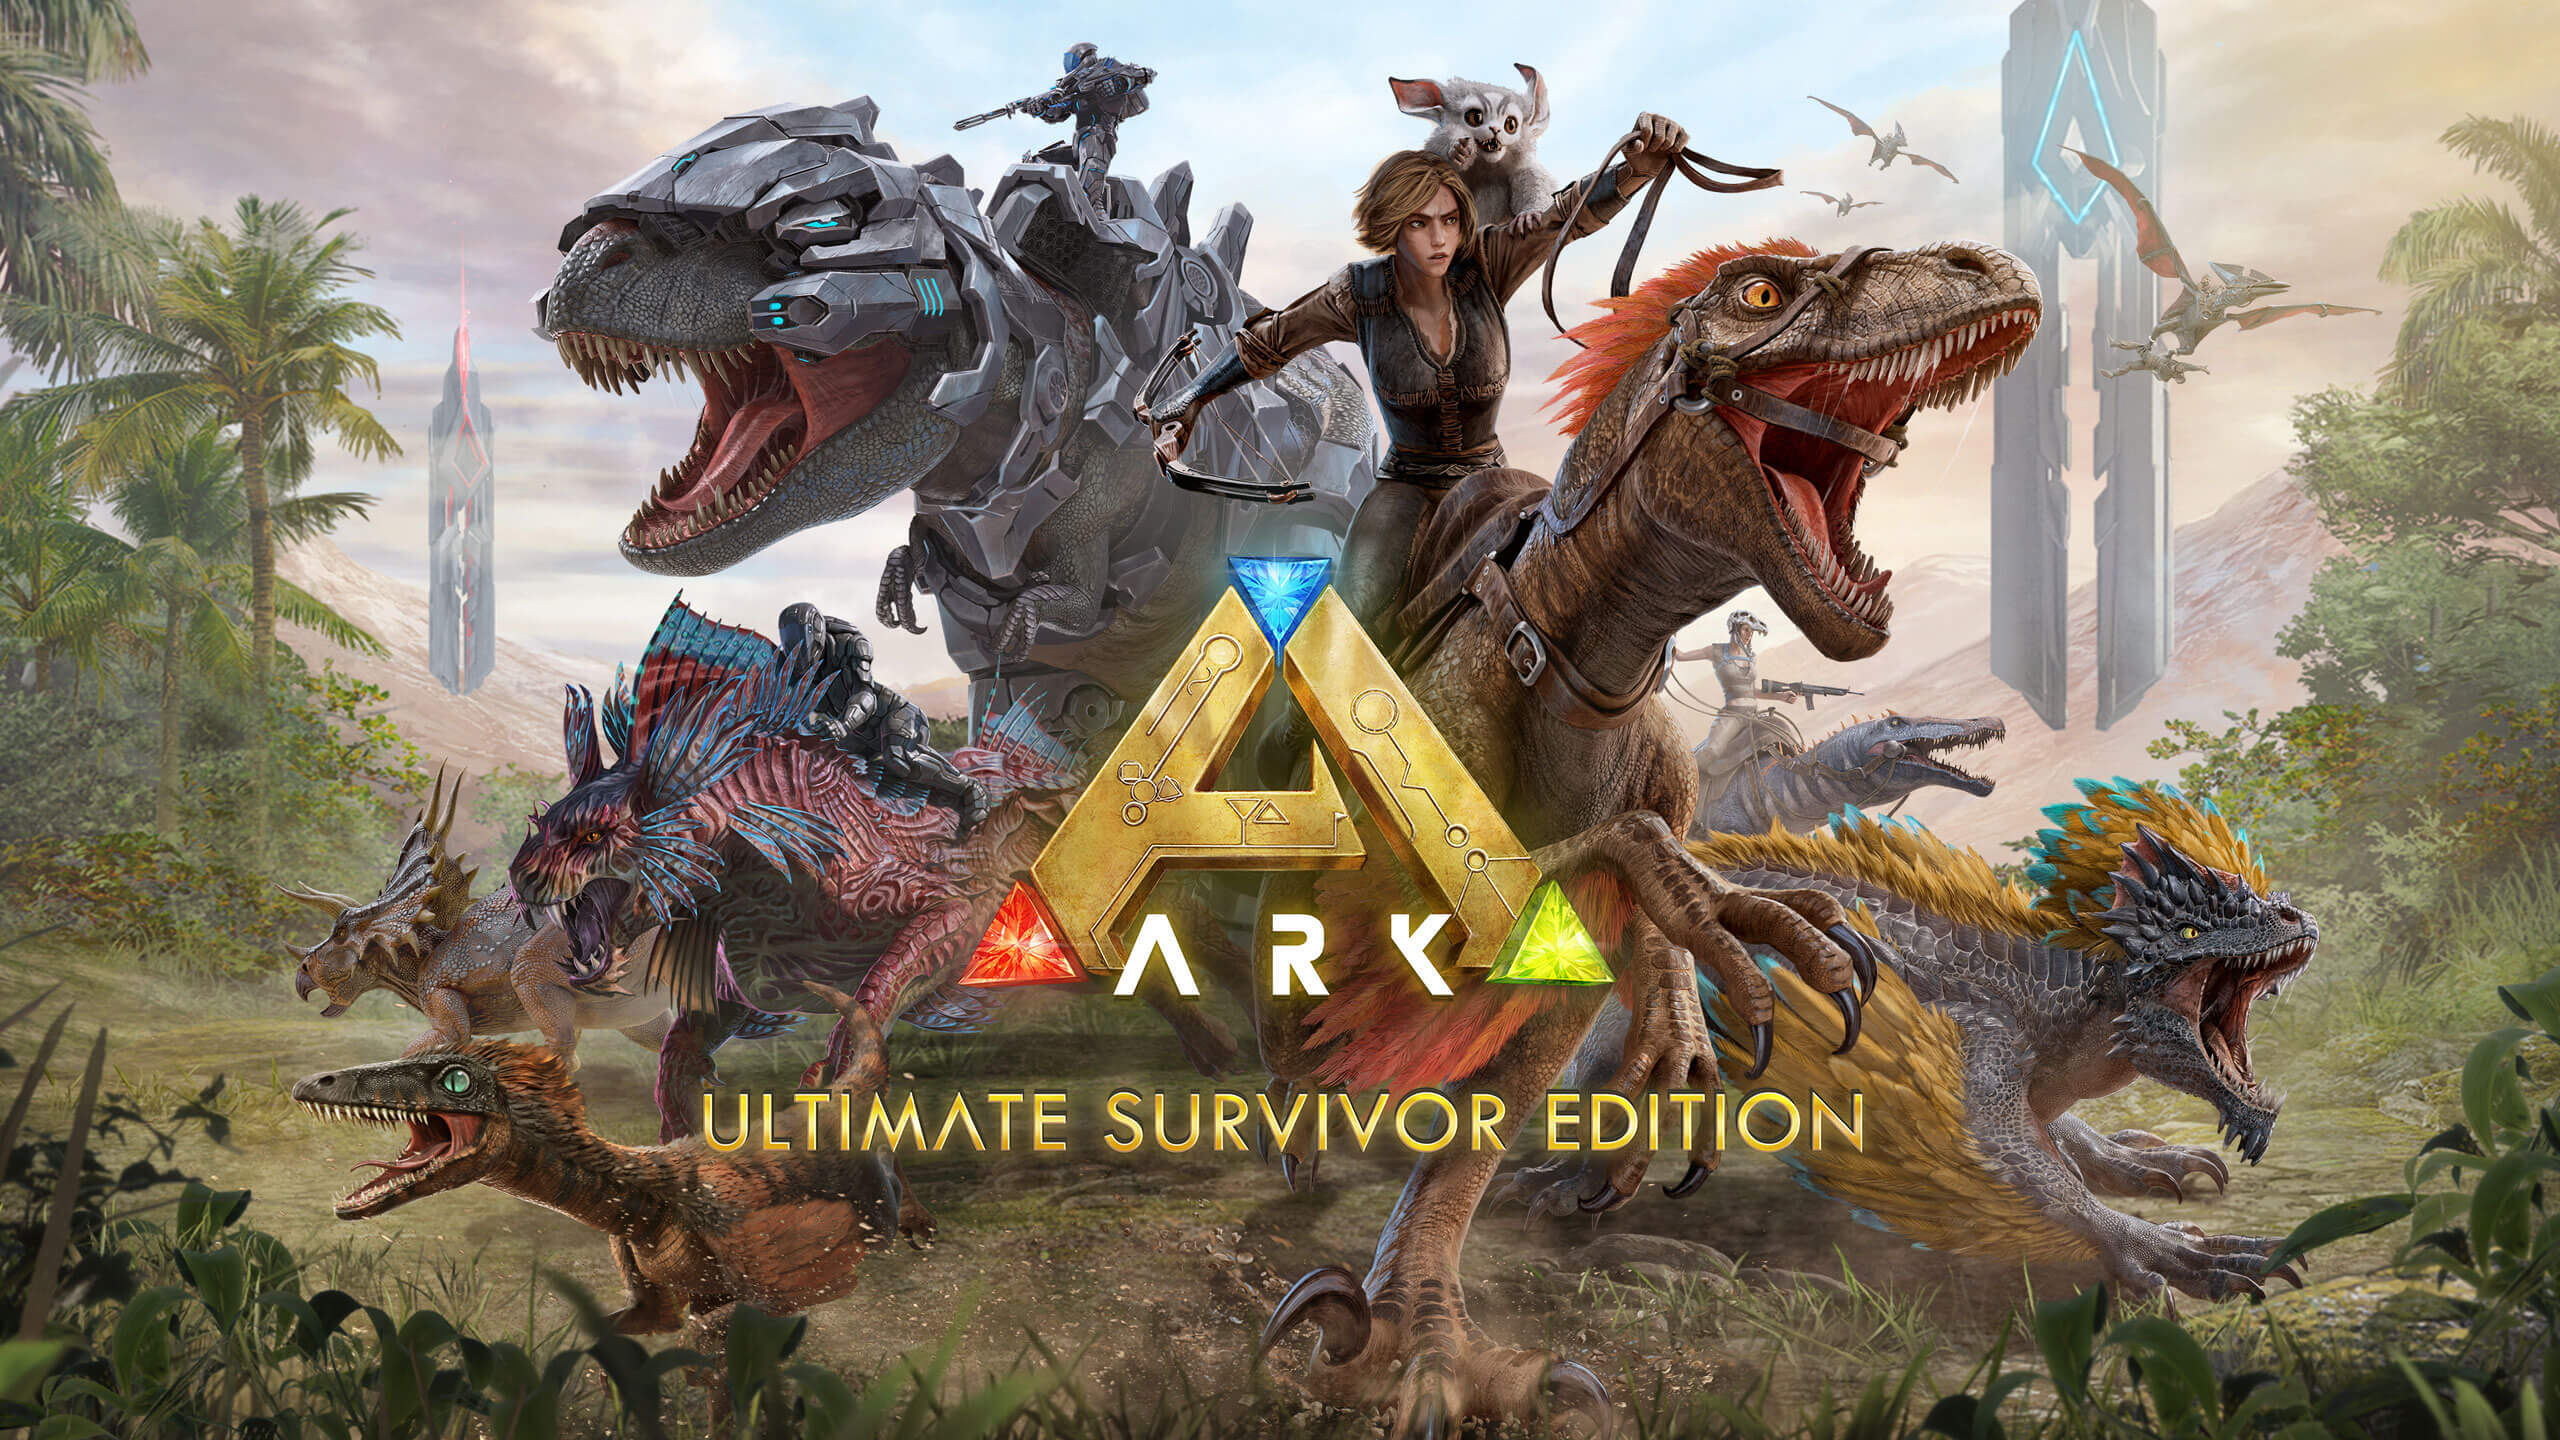 Ark: Survival Ascended is a striking upgrade but old problems set